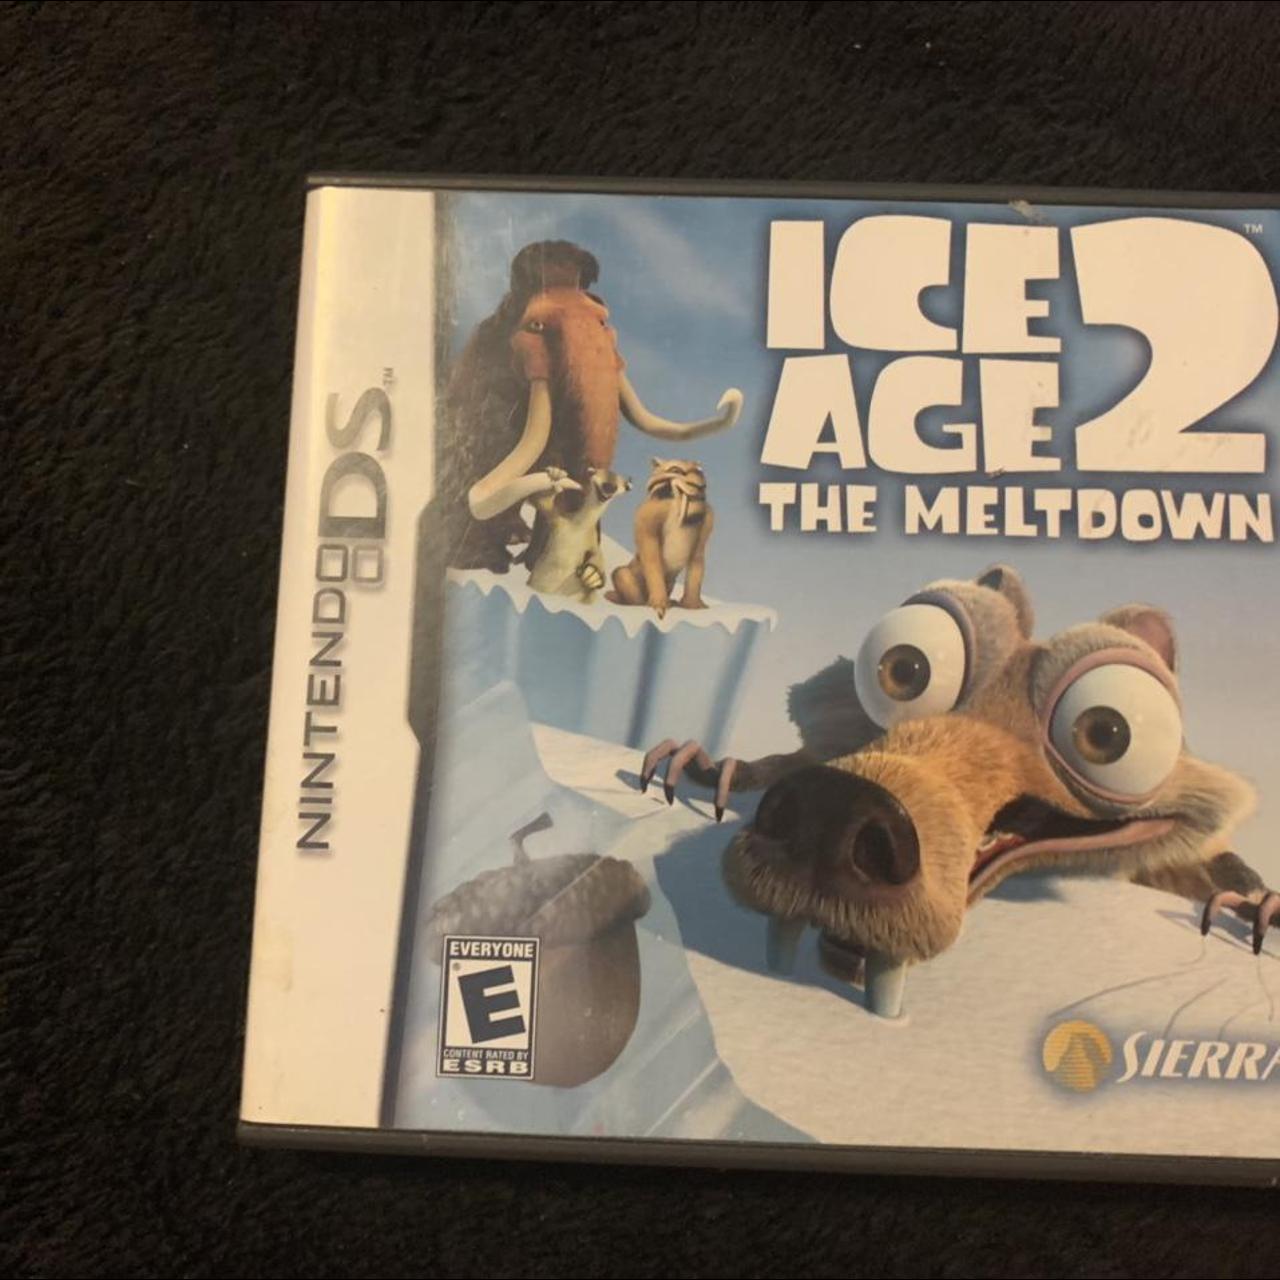 Nintendo DS Ice Age 2 the meltdown... - Depop